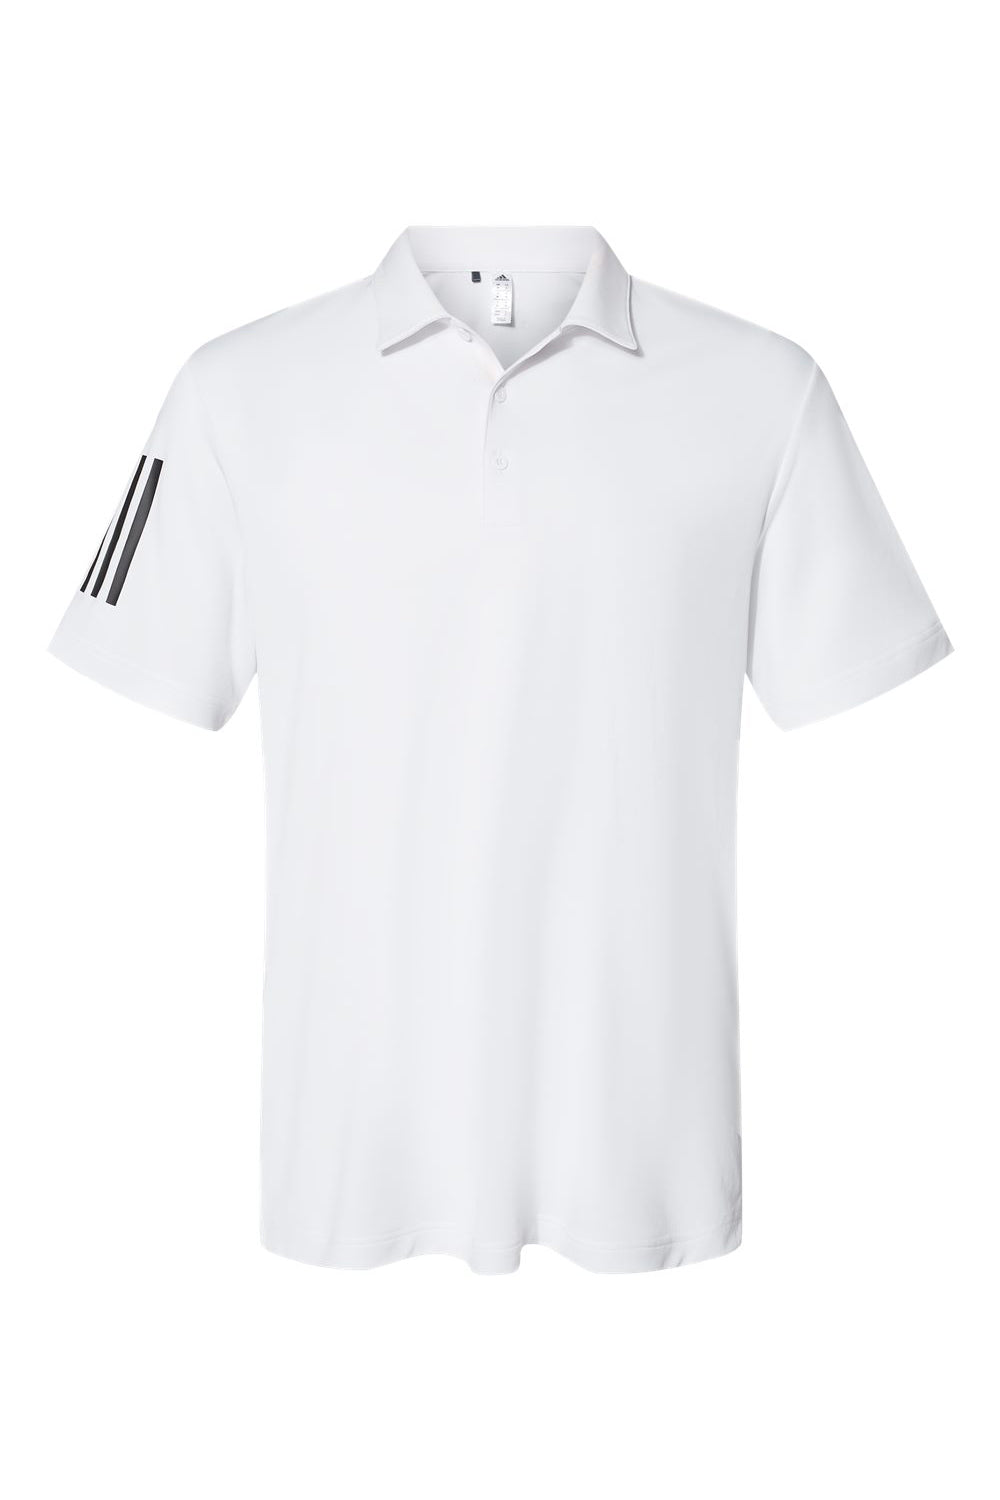 Adidas A480 Mens Floating 3 Stripes UPF 50+ Short Sleeve Polo Shirt White/Black Flat Front